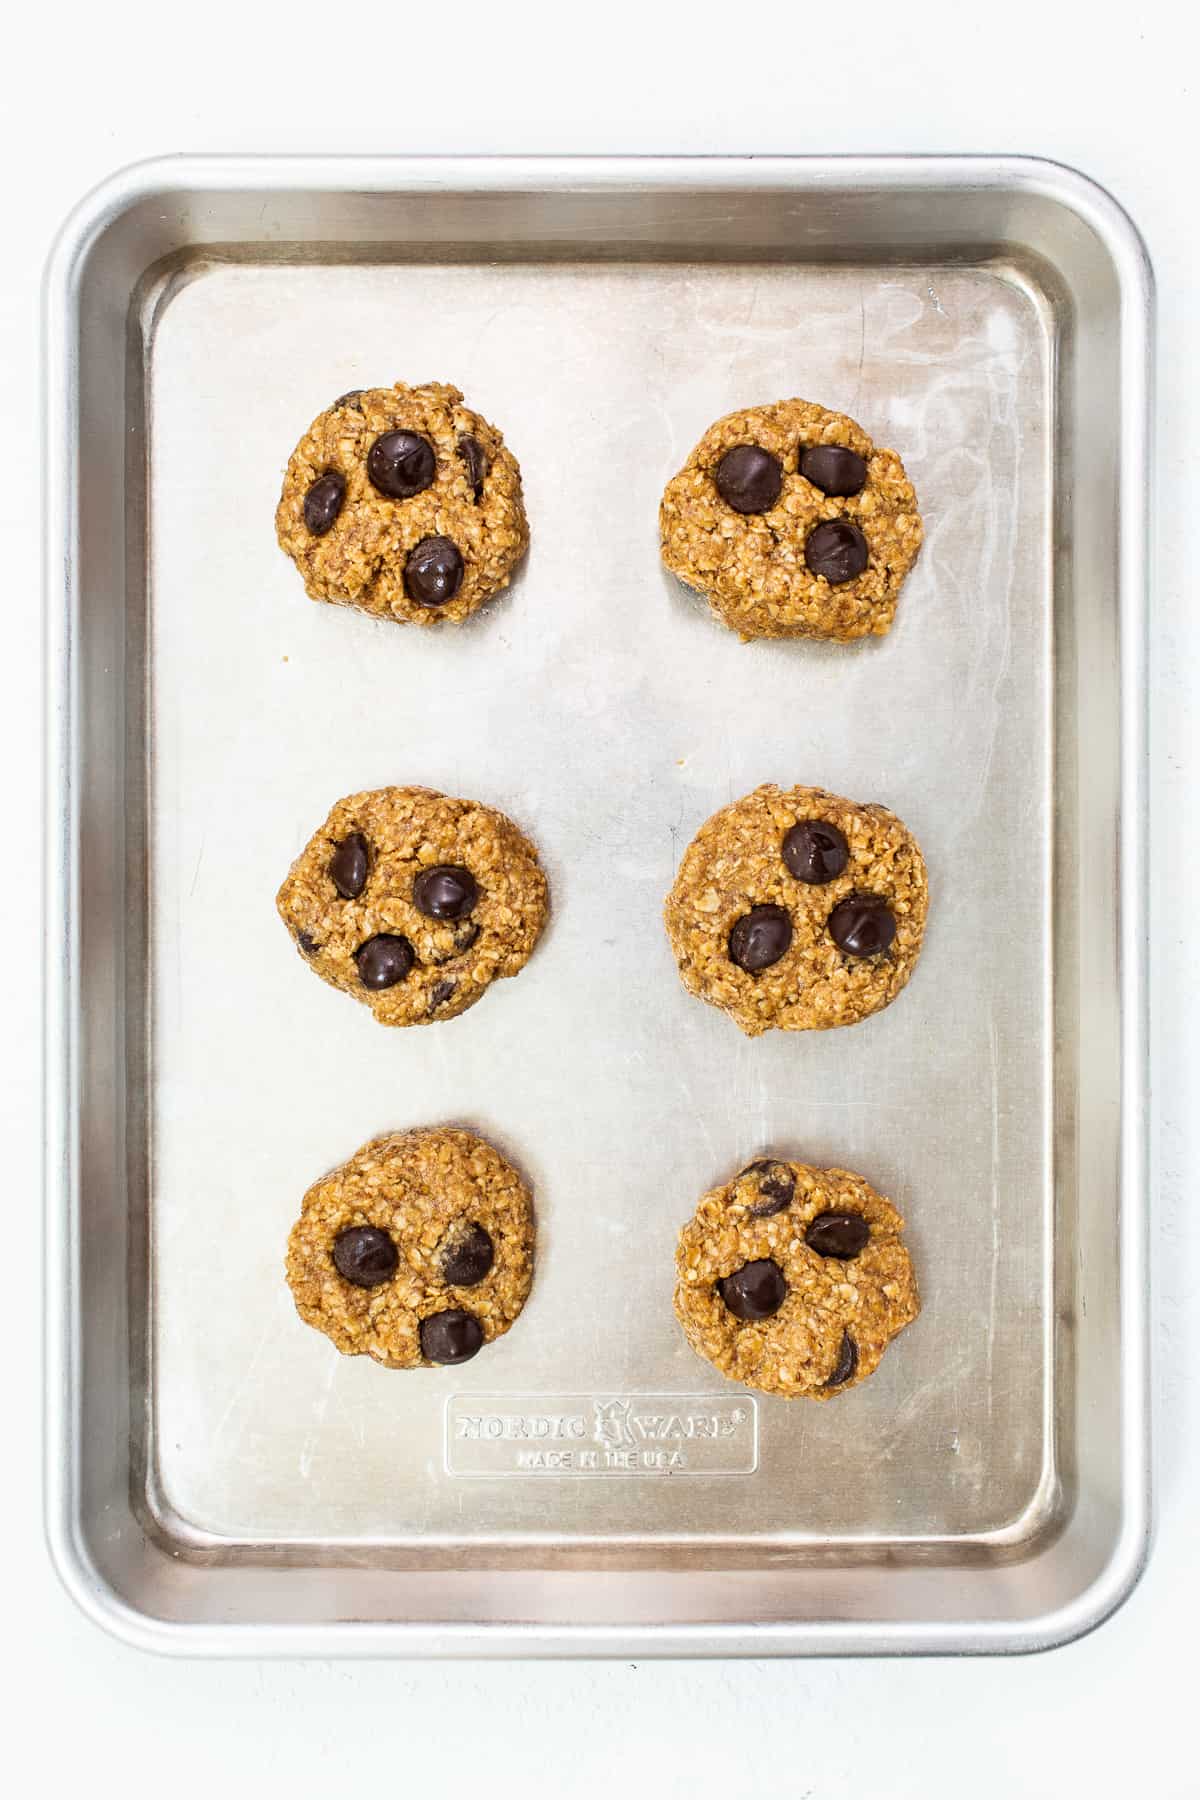 Lactation cookies on a baking sheet.